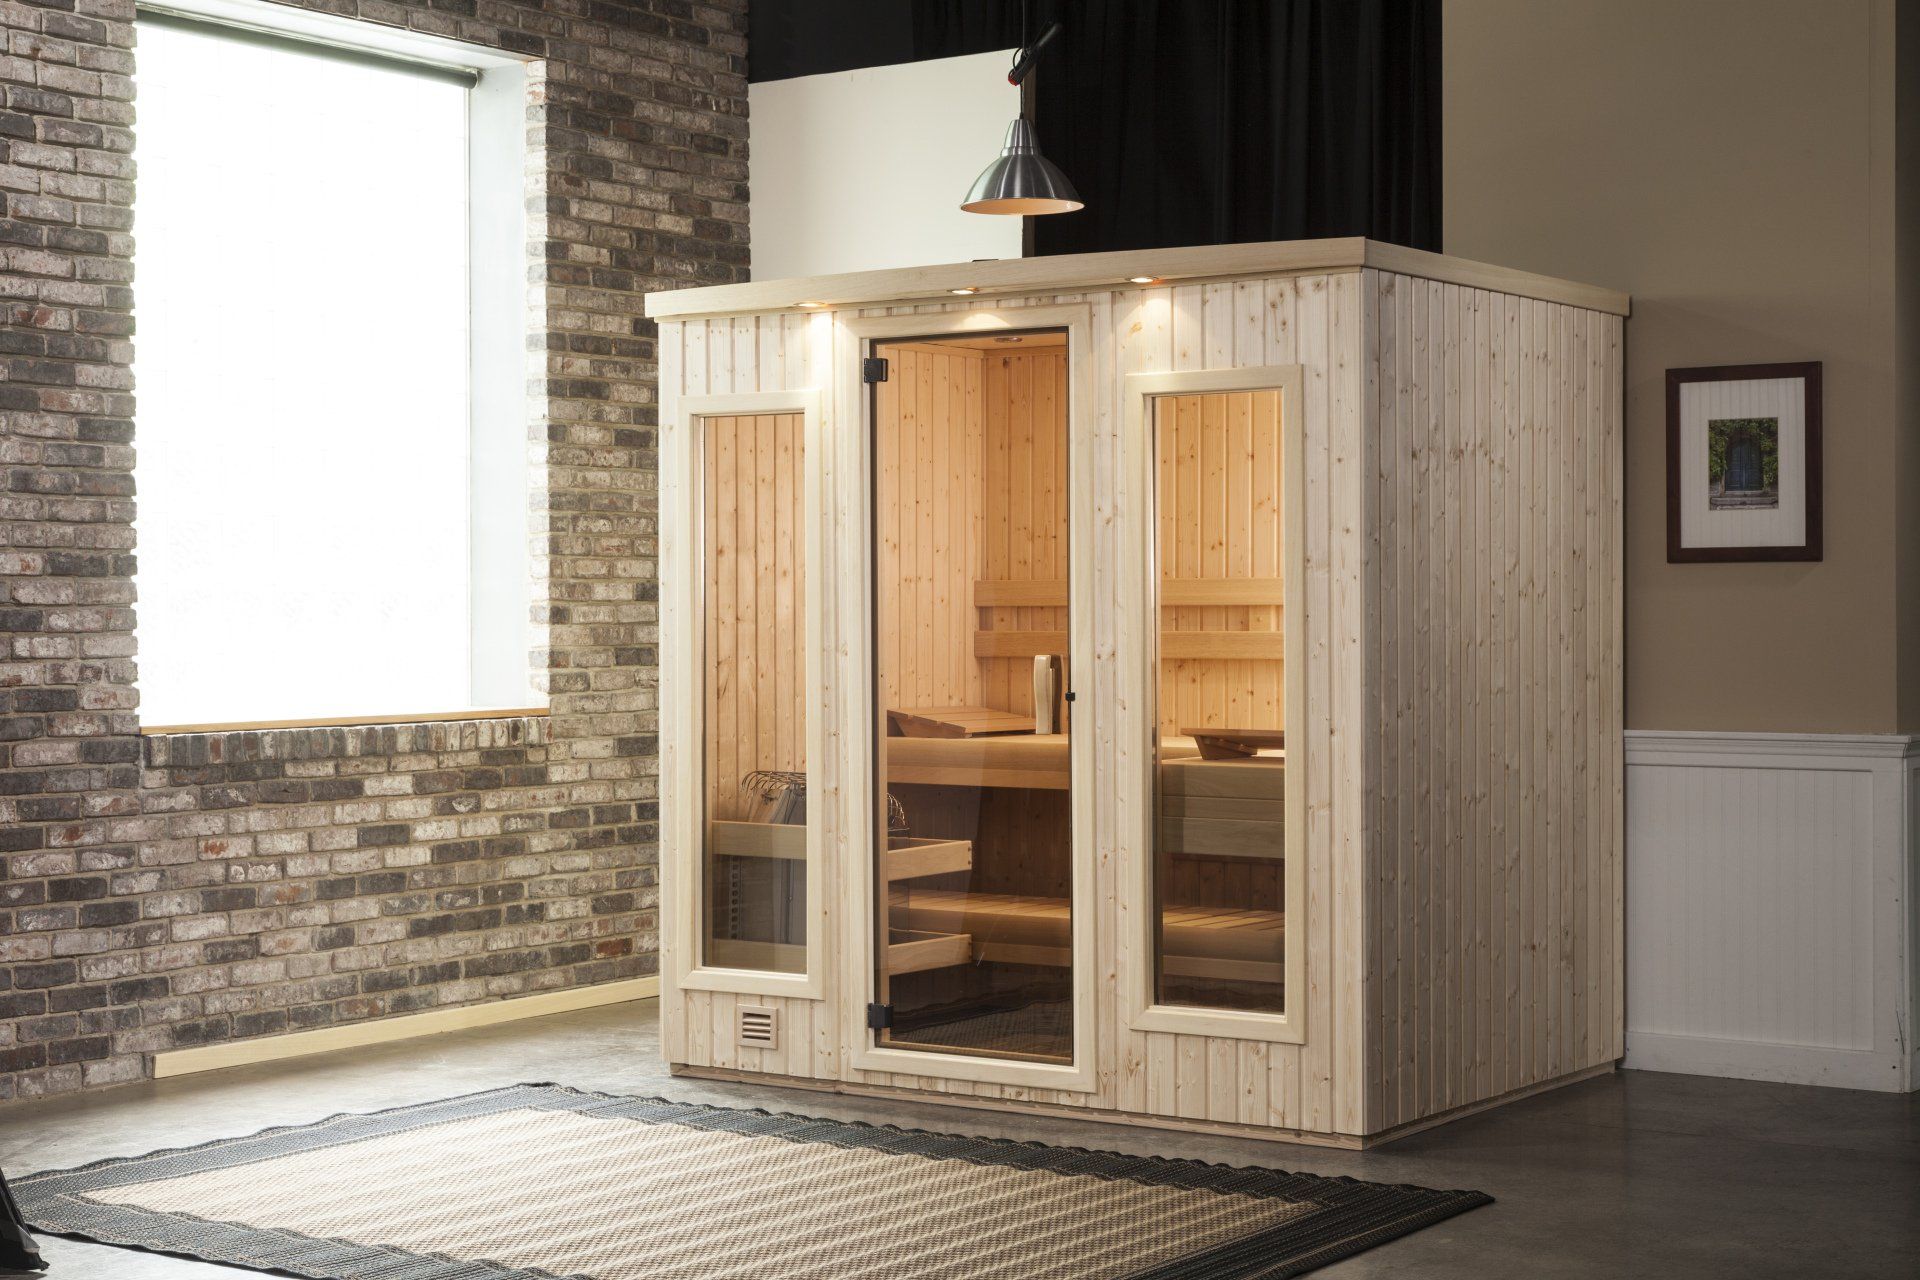 Sisu - home sauna in Eugene, OR